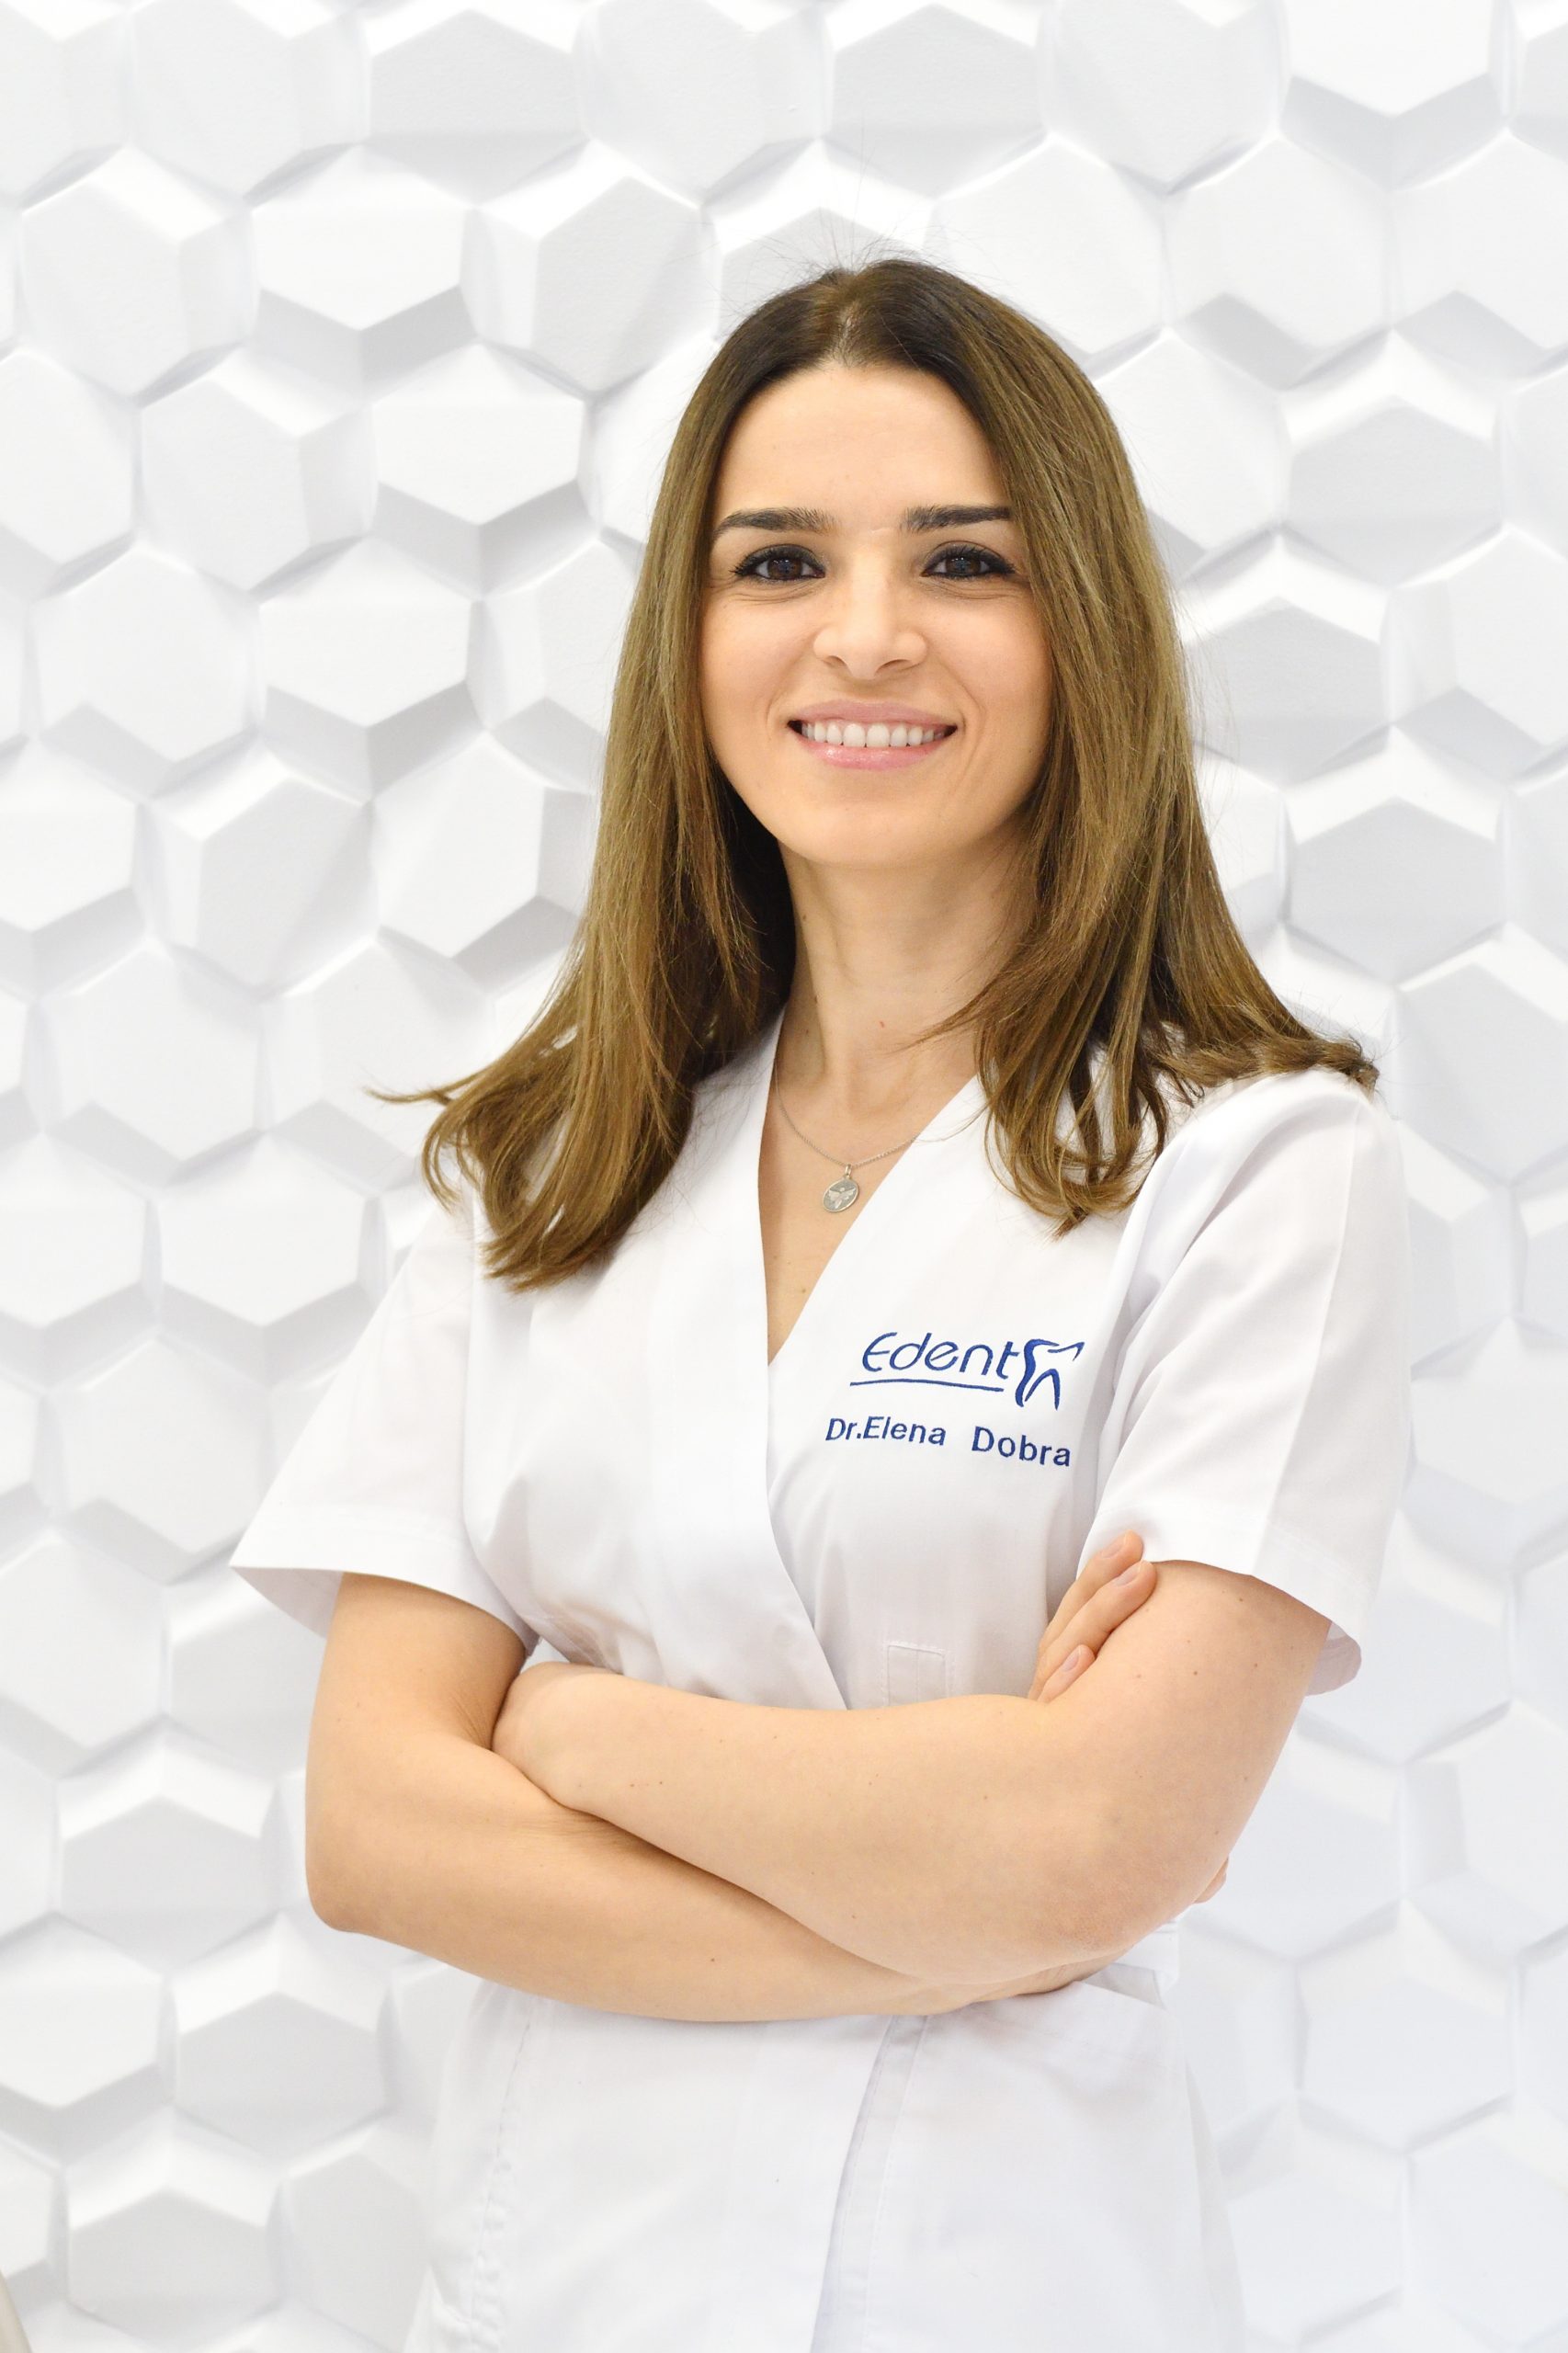 Dr. Elena Dobra